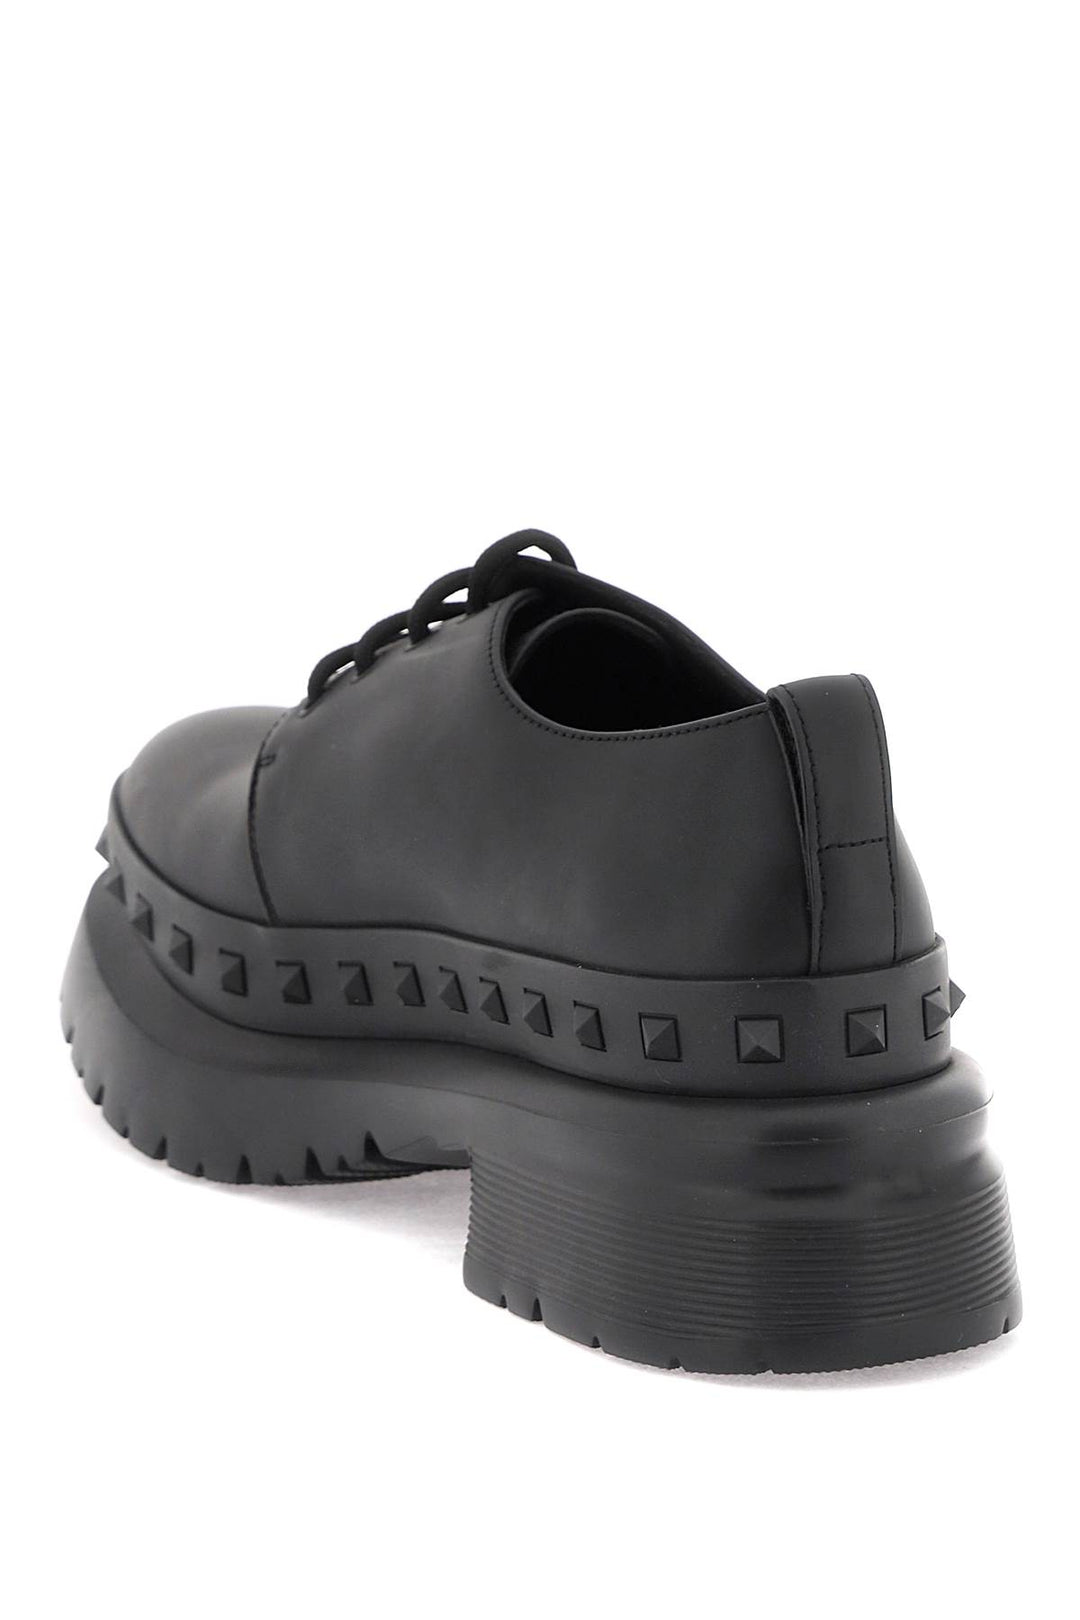 Valentino Garavani Rockstud M Way Leather Derby Shoes   Black